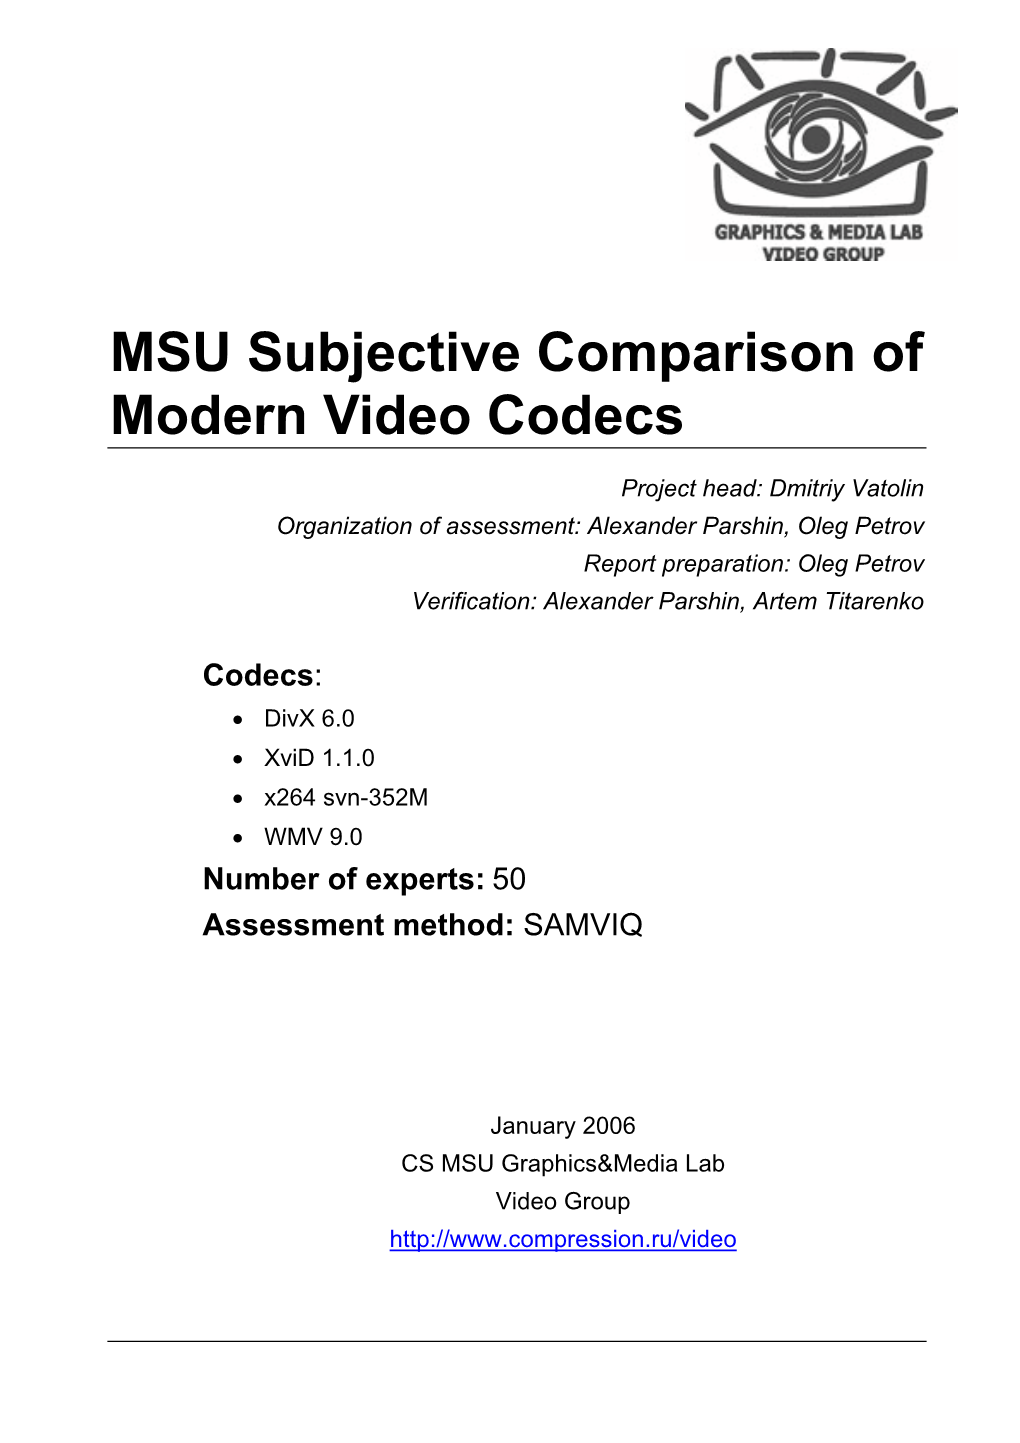 Download MSU Subjective Comparison of Modern Video Codecs